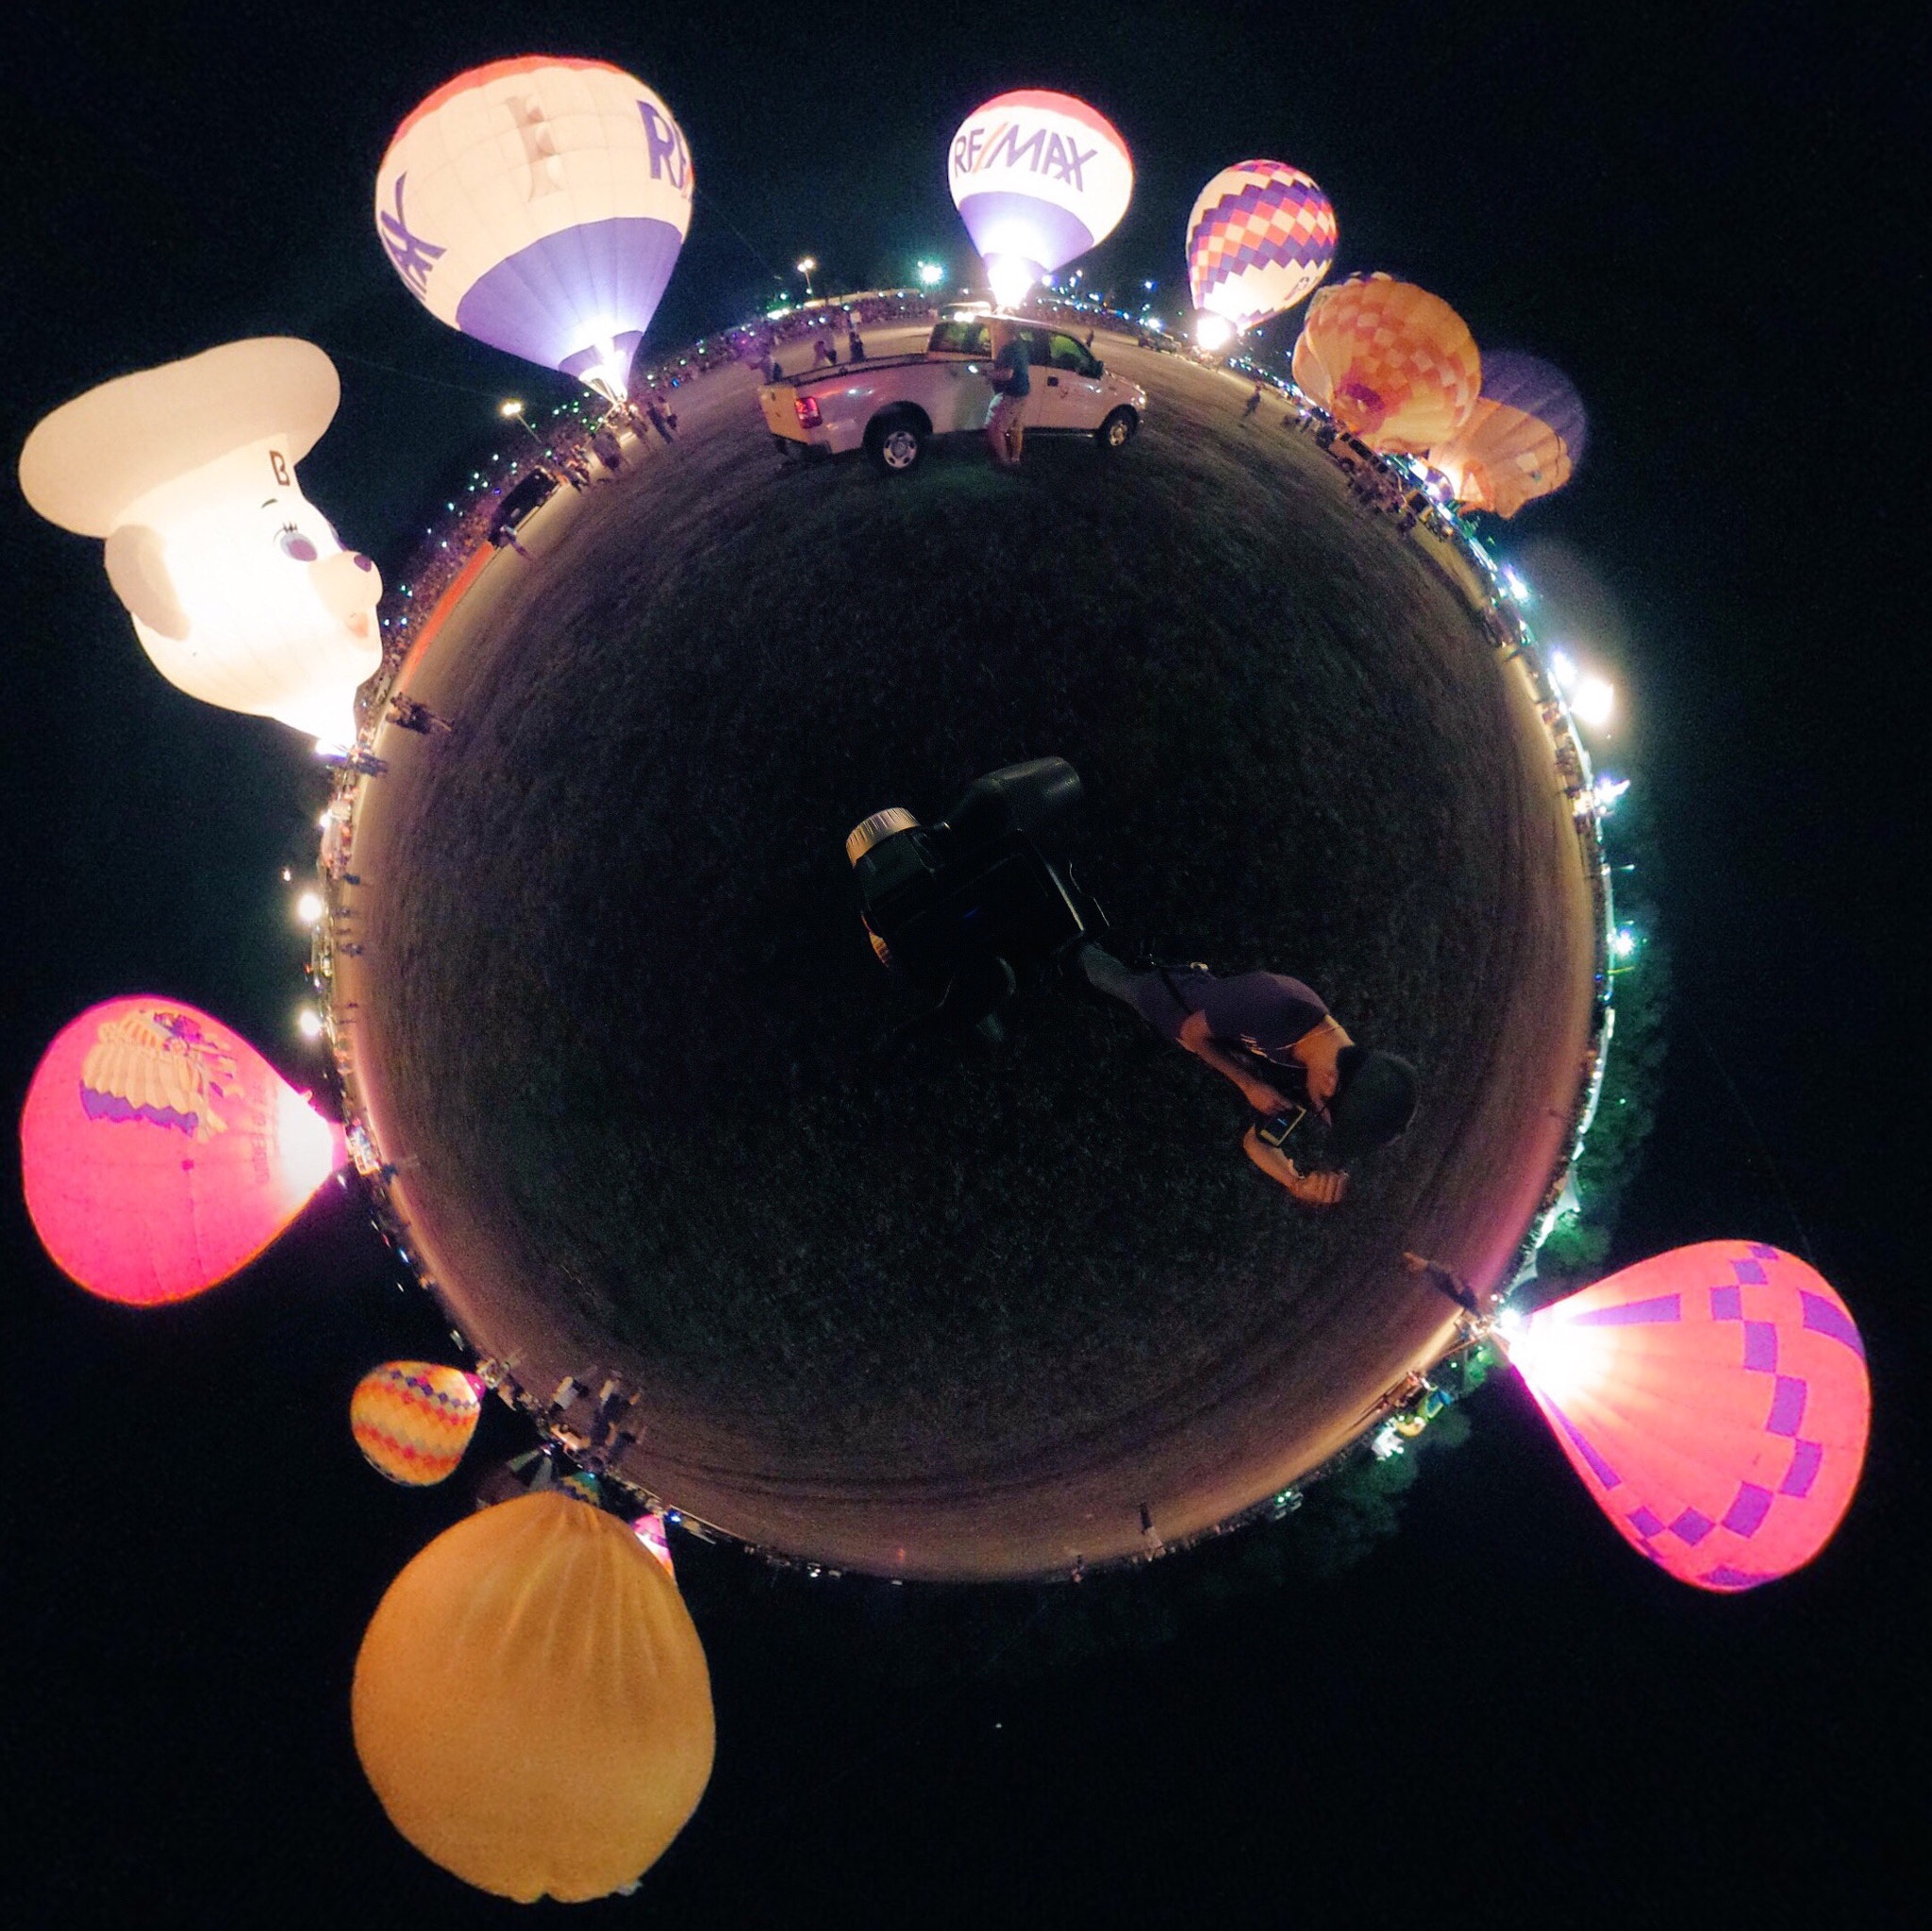 Ricoh Theta S sample photo. Saturday night's balloon glow photography